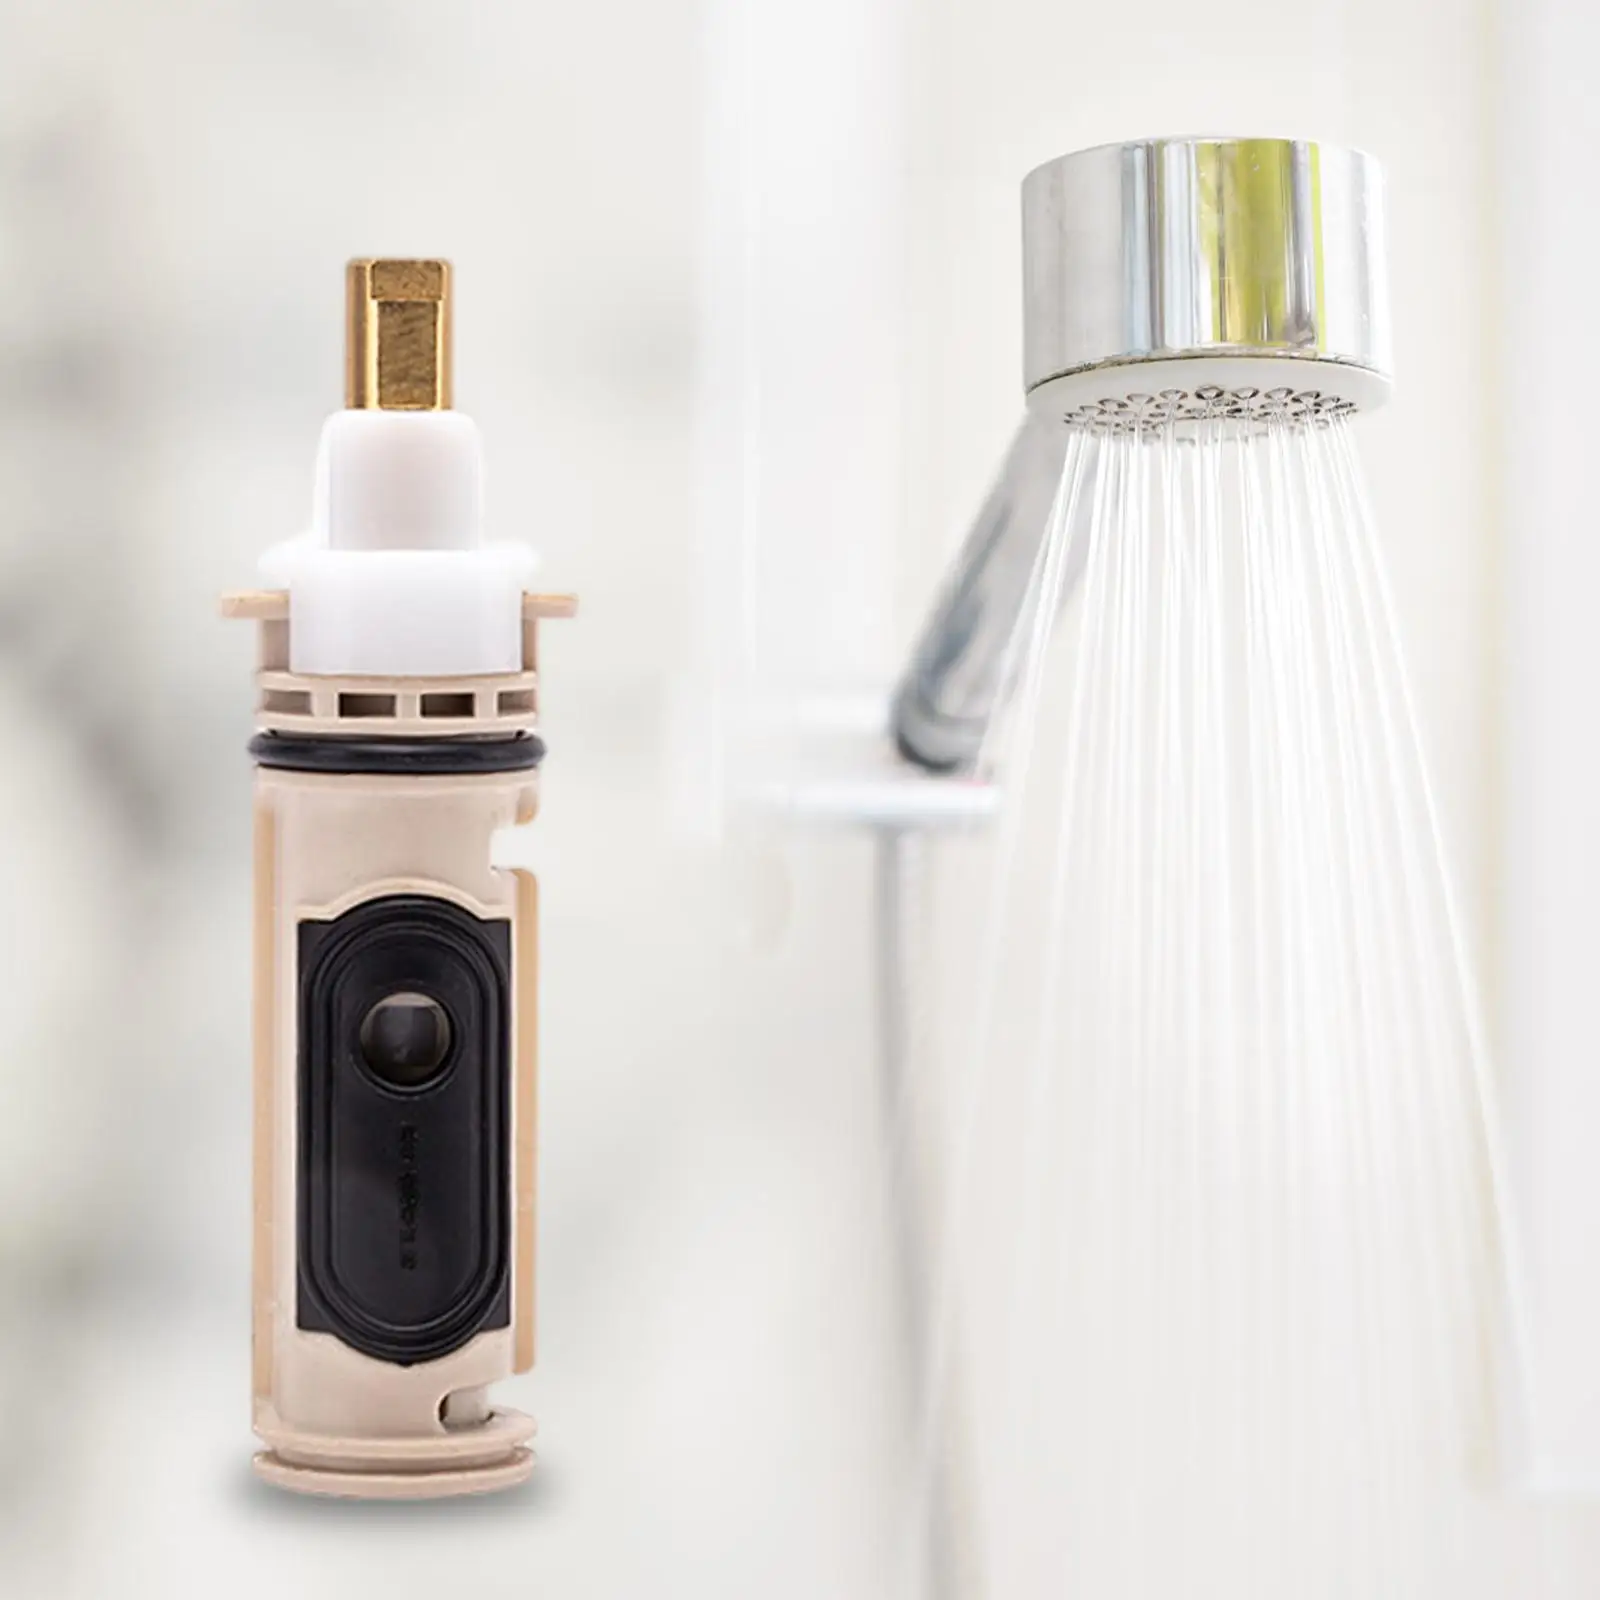 1 Piece Shower Cartridge Replacement Single Handle Faucets Valve Repair for Bath Tub Bathroom Accessories Kitchen